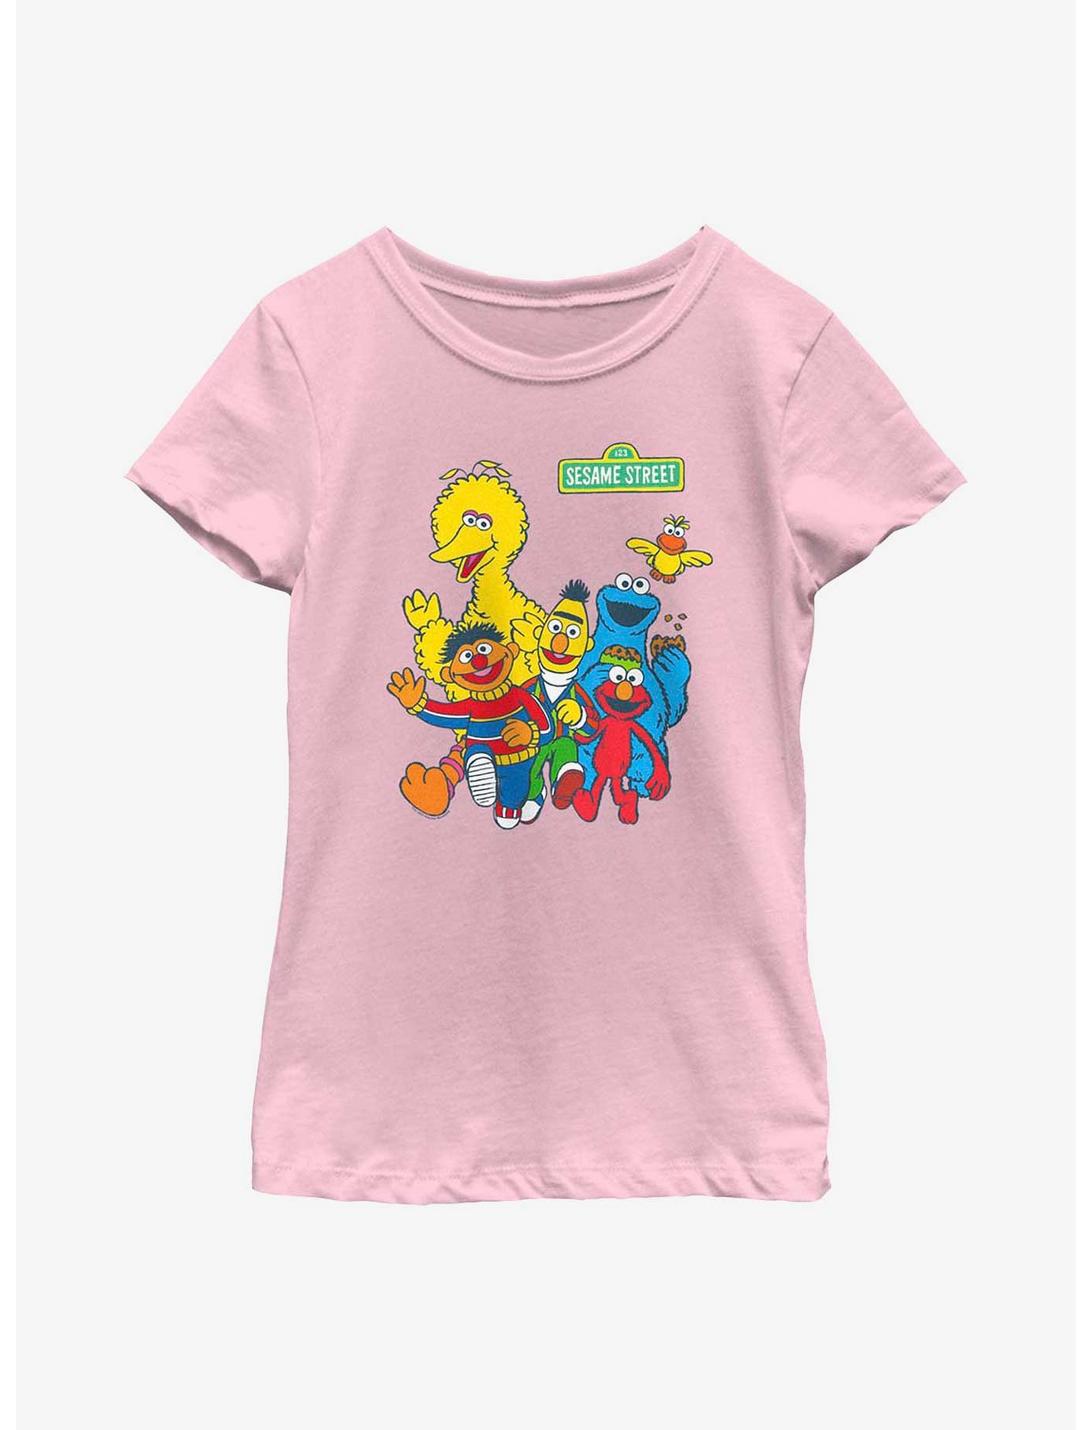 Sesame Street Group Walk Youth Girls T-Shirt, PINK, hi-res